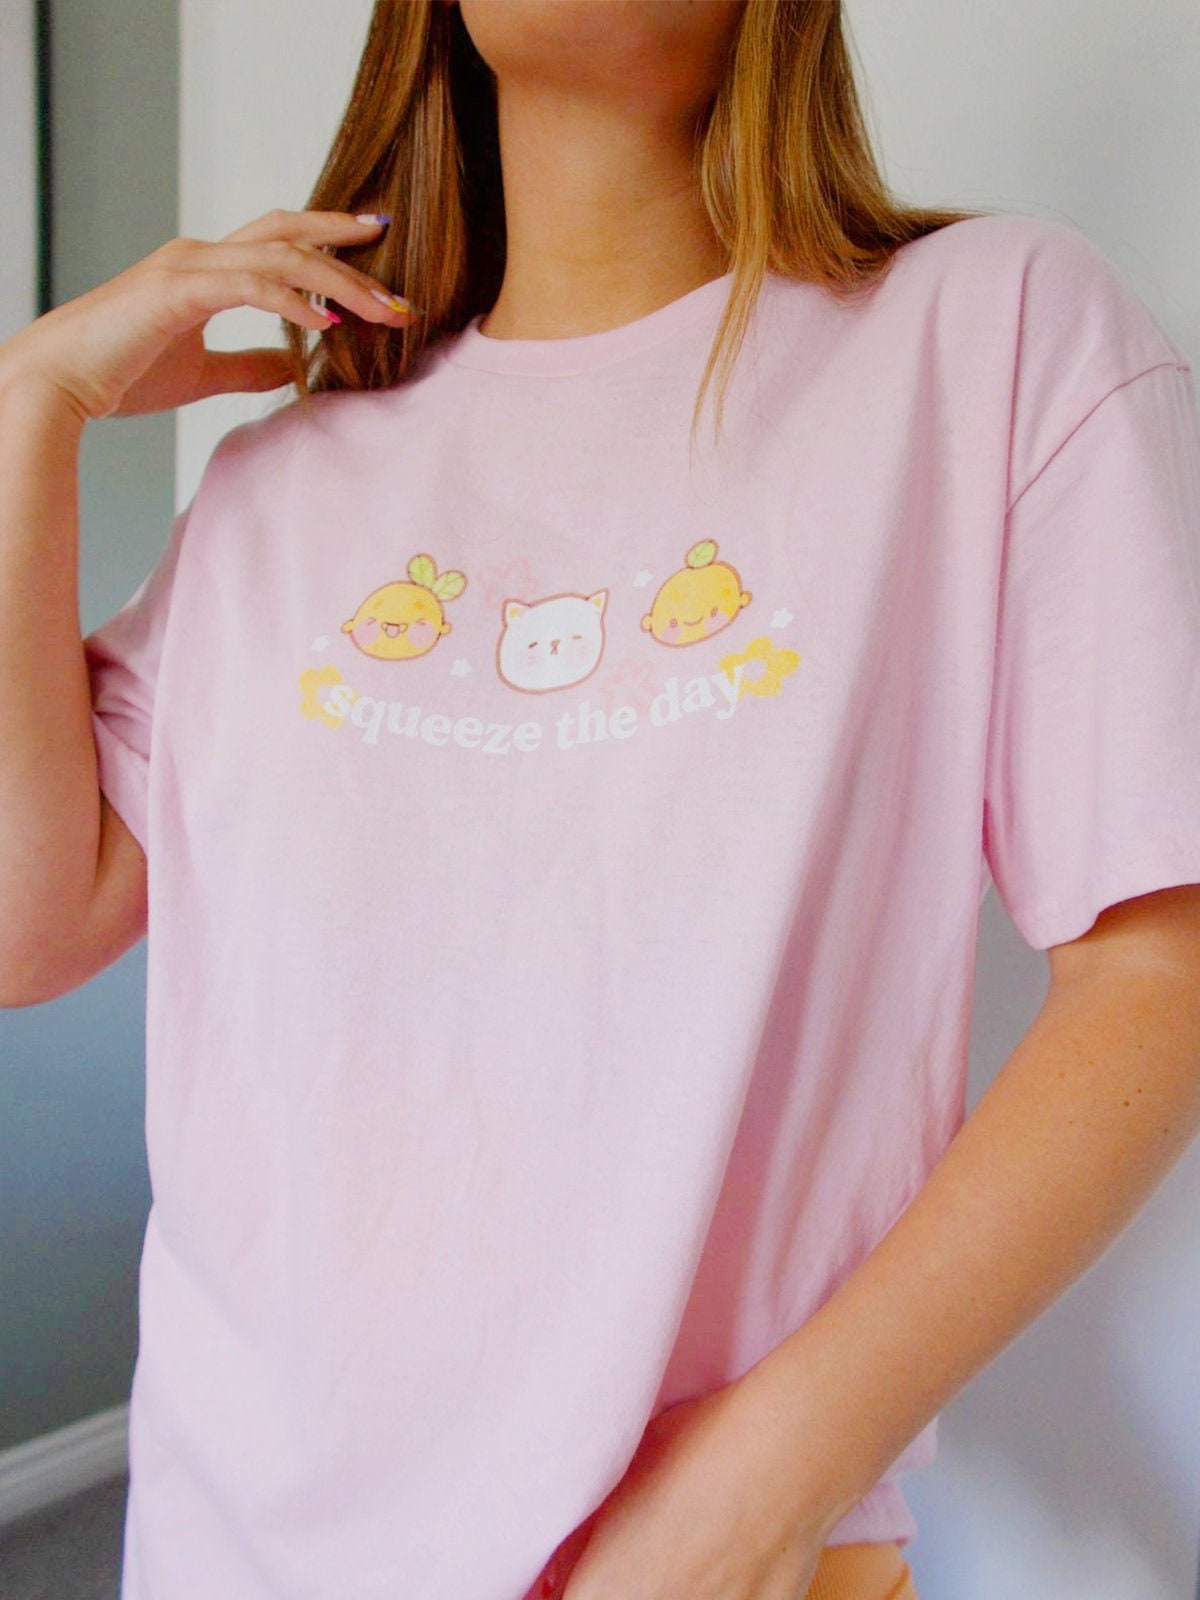 Squeeze the Day Kawaii Pink T-shirt Cute Pastel Pink T-shirt 